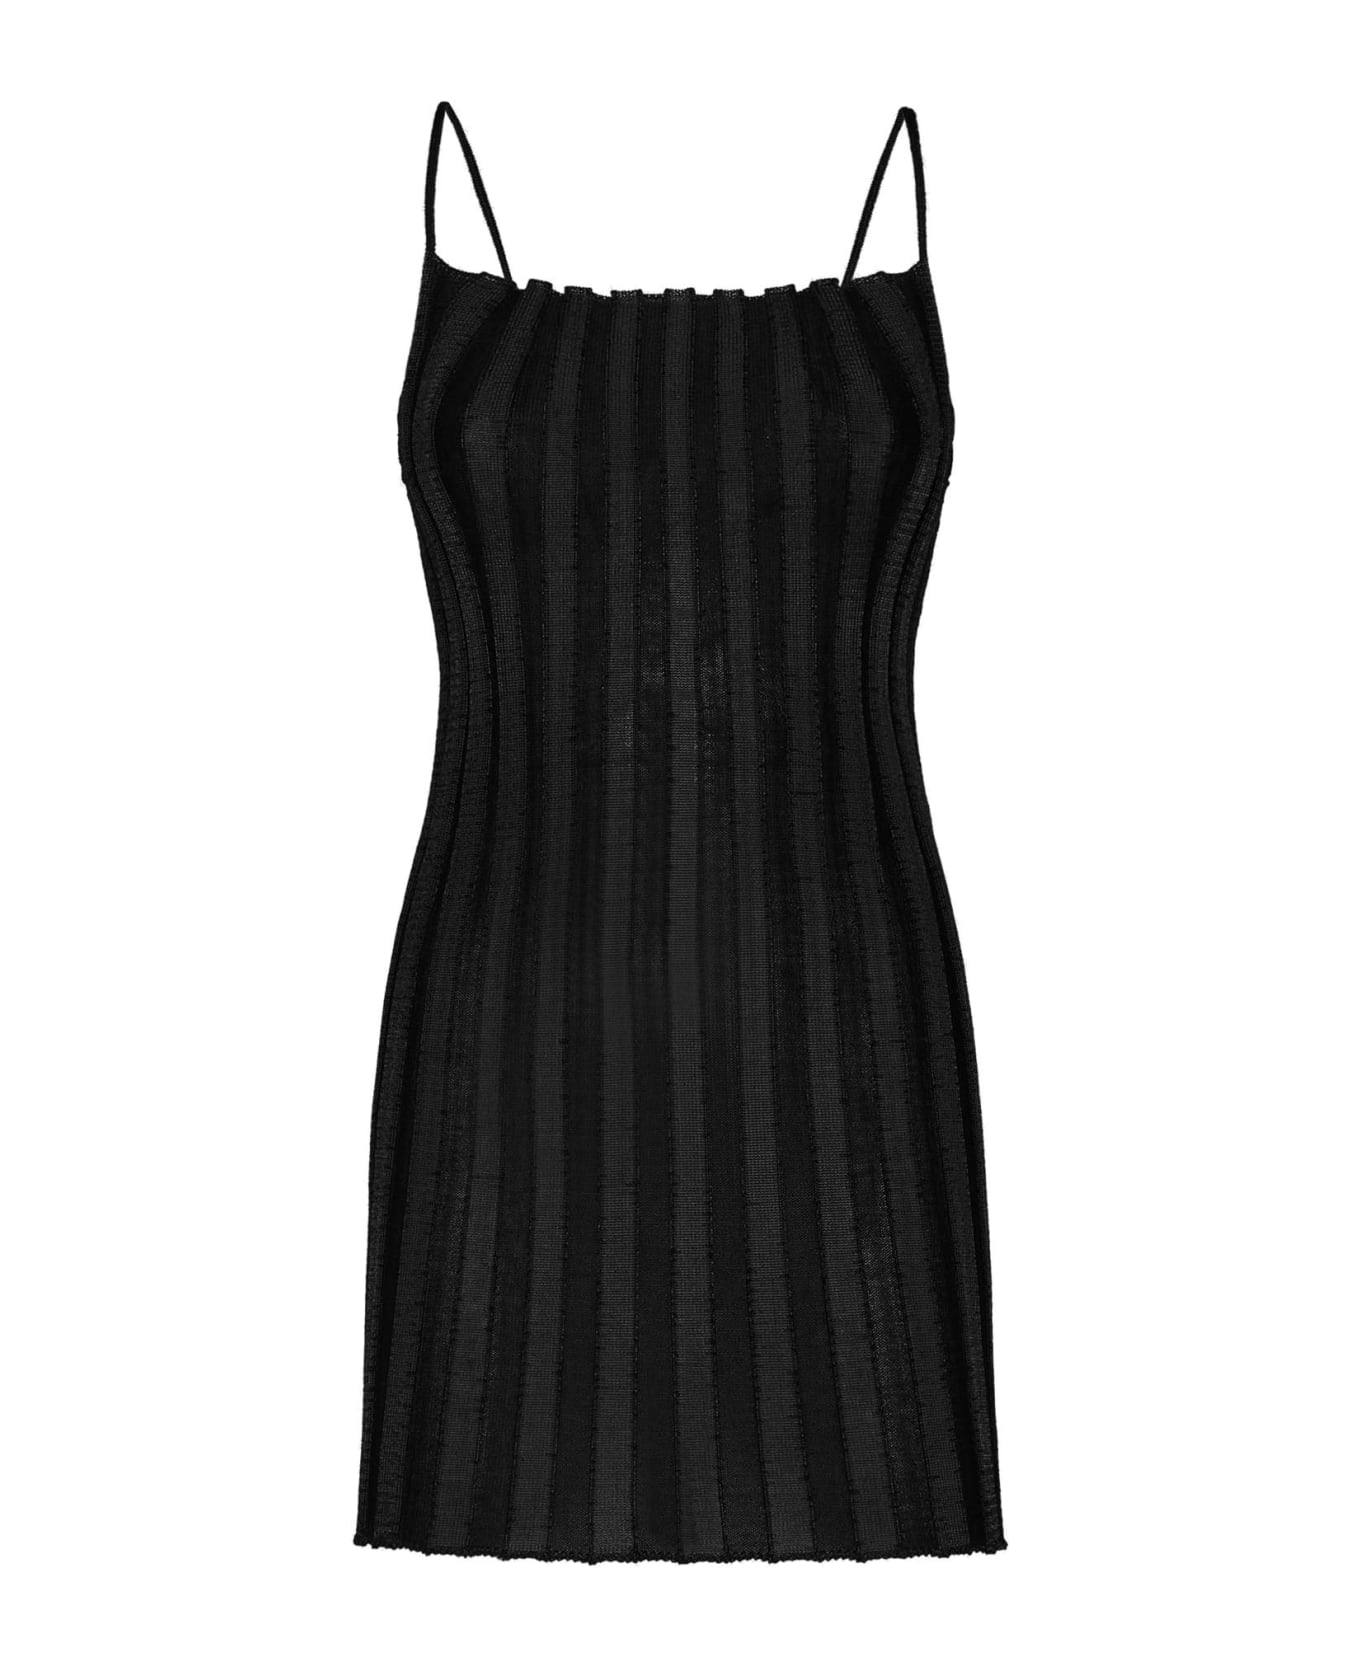 A. Roege Hove Katrine Short Dress - BLACK (Black)